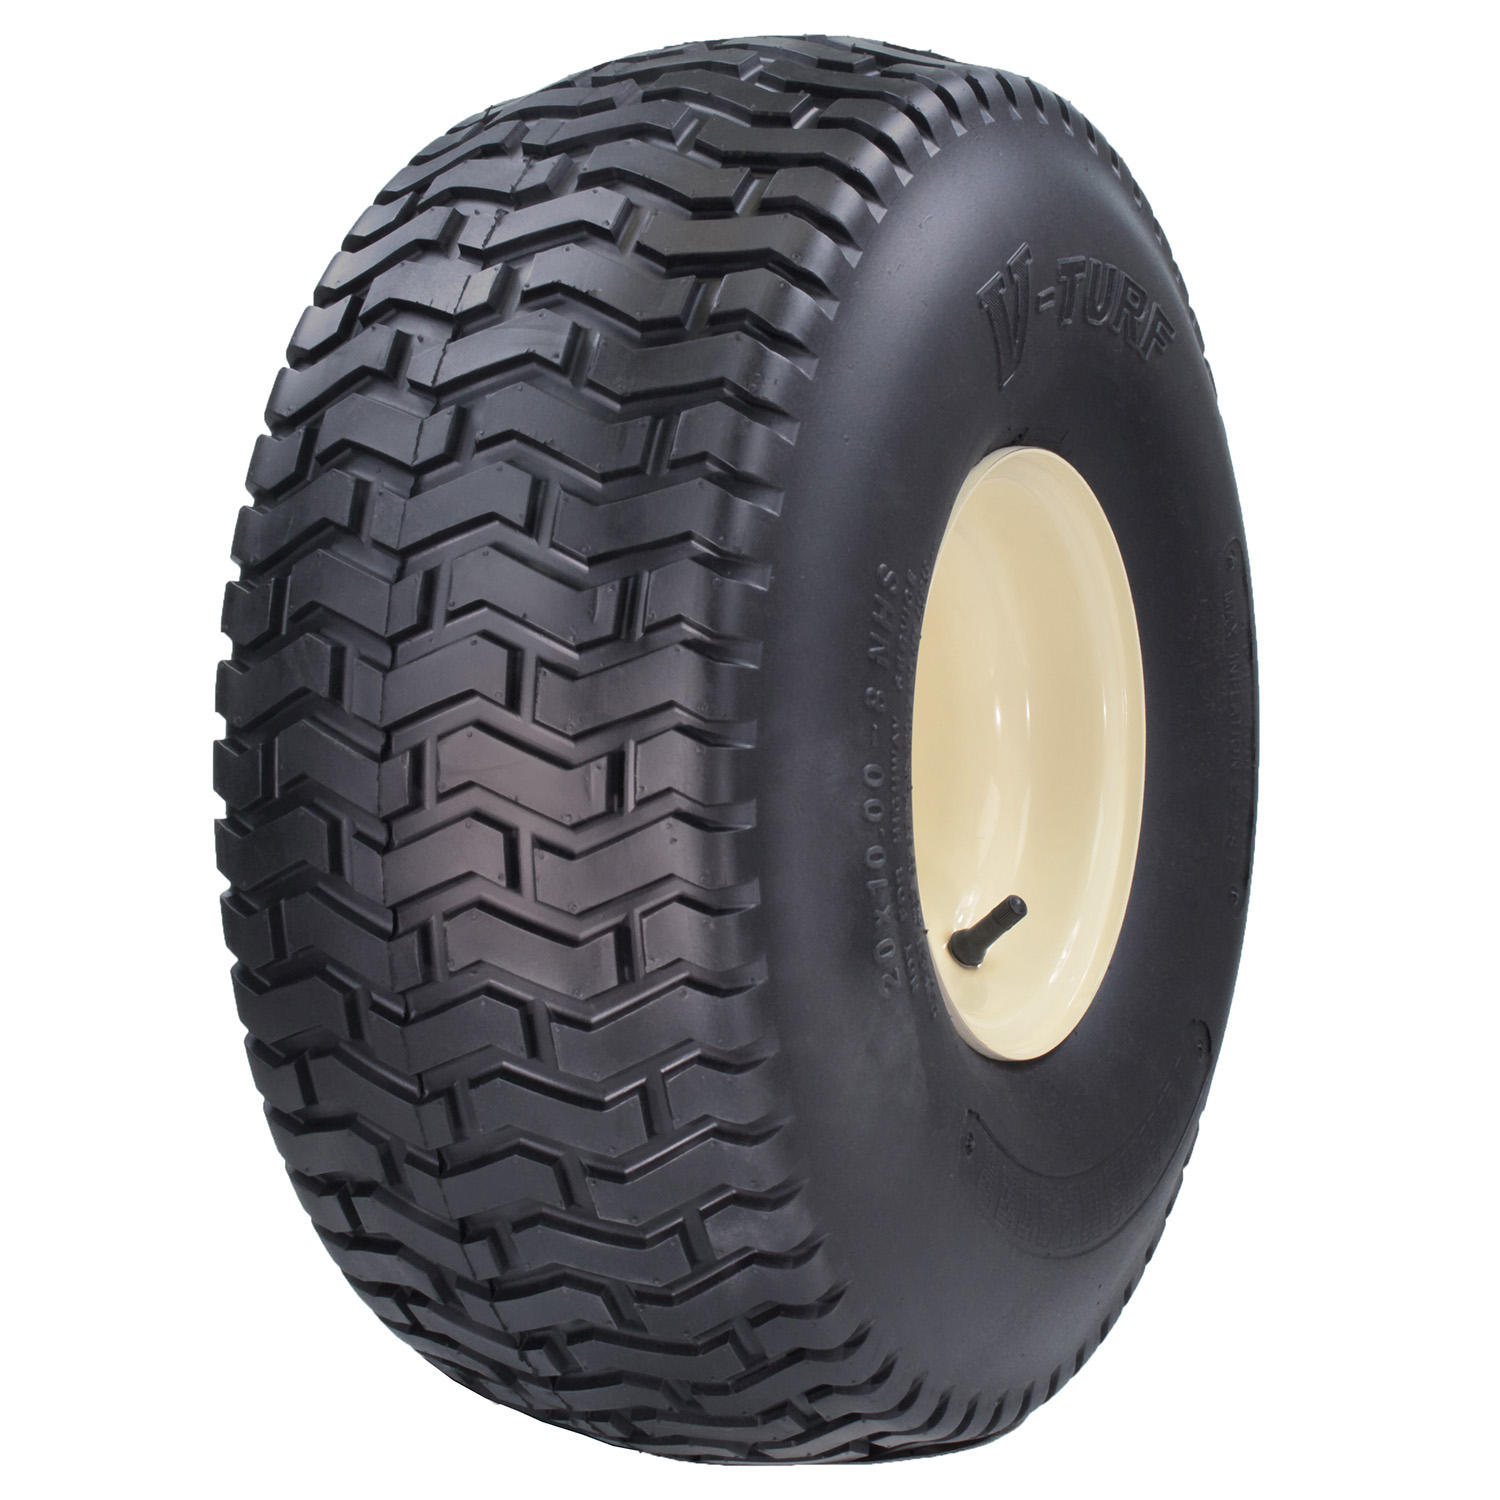 Greenball Soft Turf - 18X8.50-8 Lawn & Garden Tire